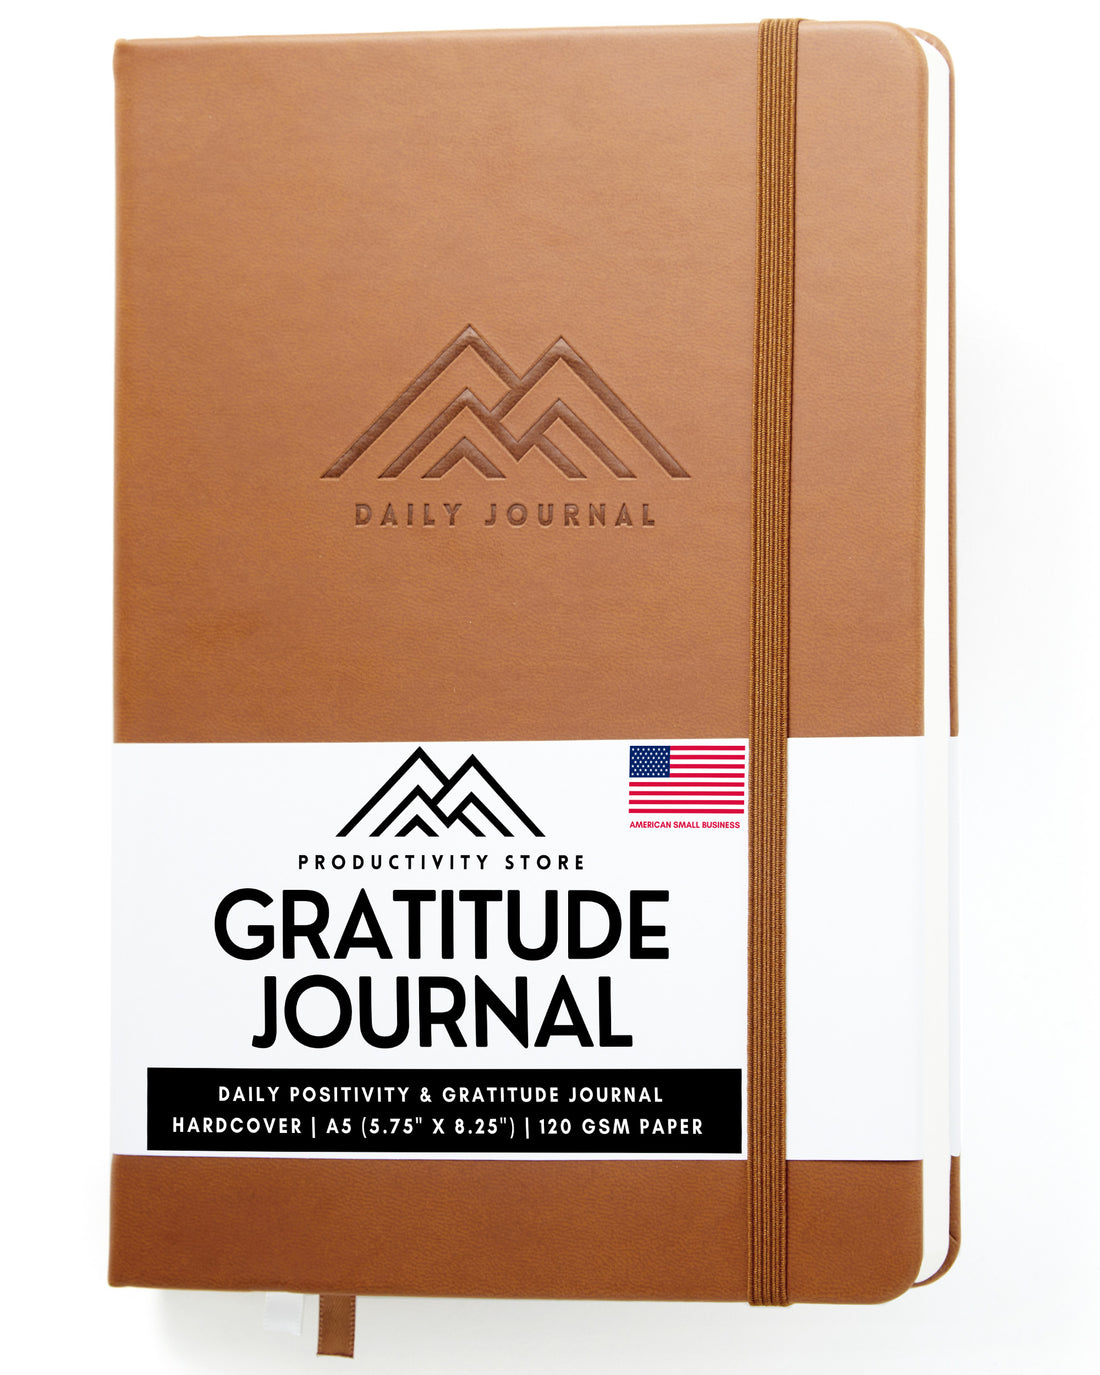 Making Gratitude Journaling a Lifelong Habit